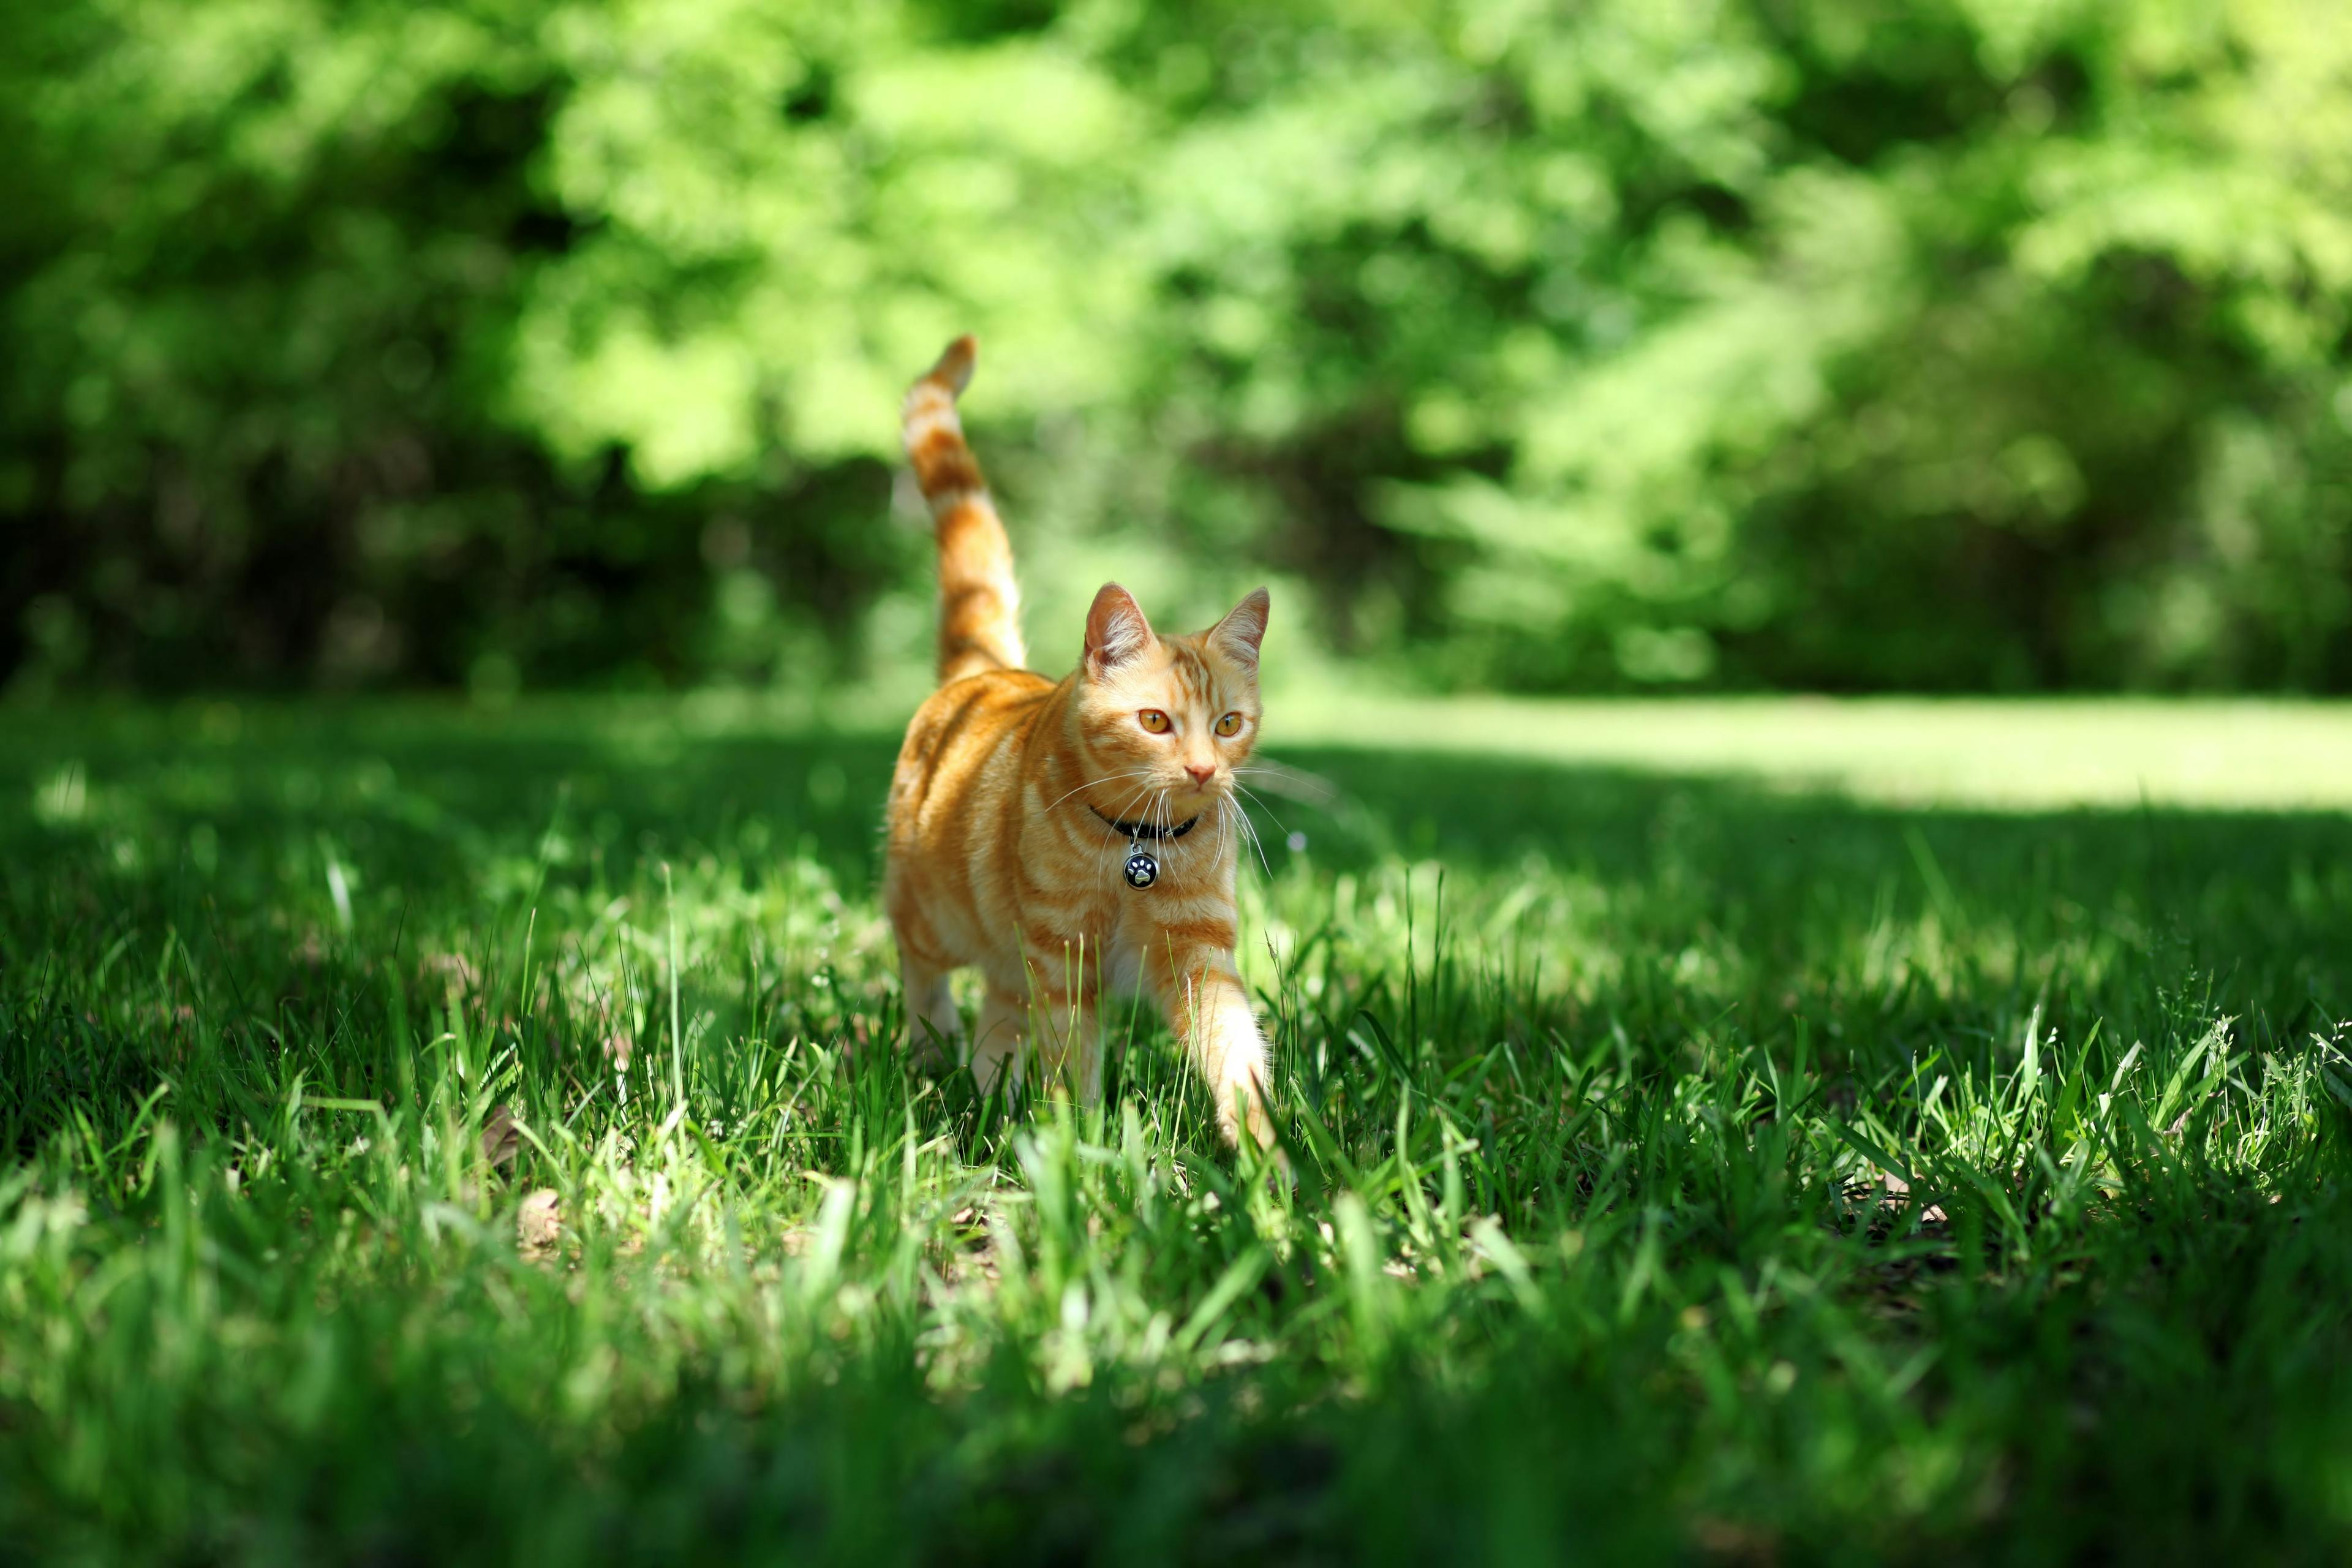 Mandatory cat microchipping legislation introduced in the UK